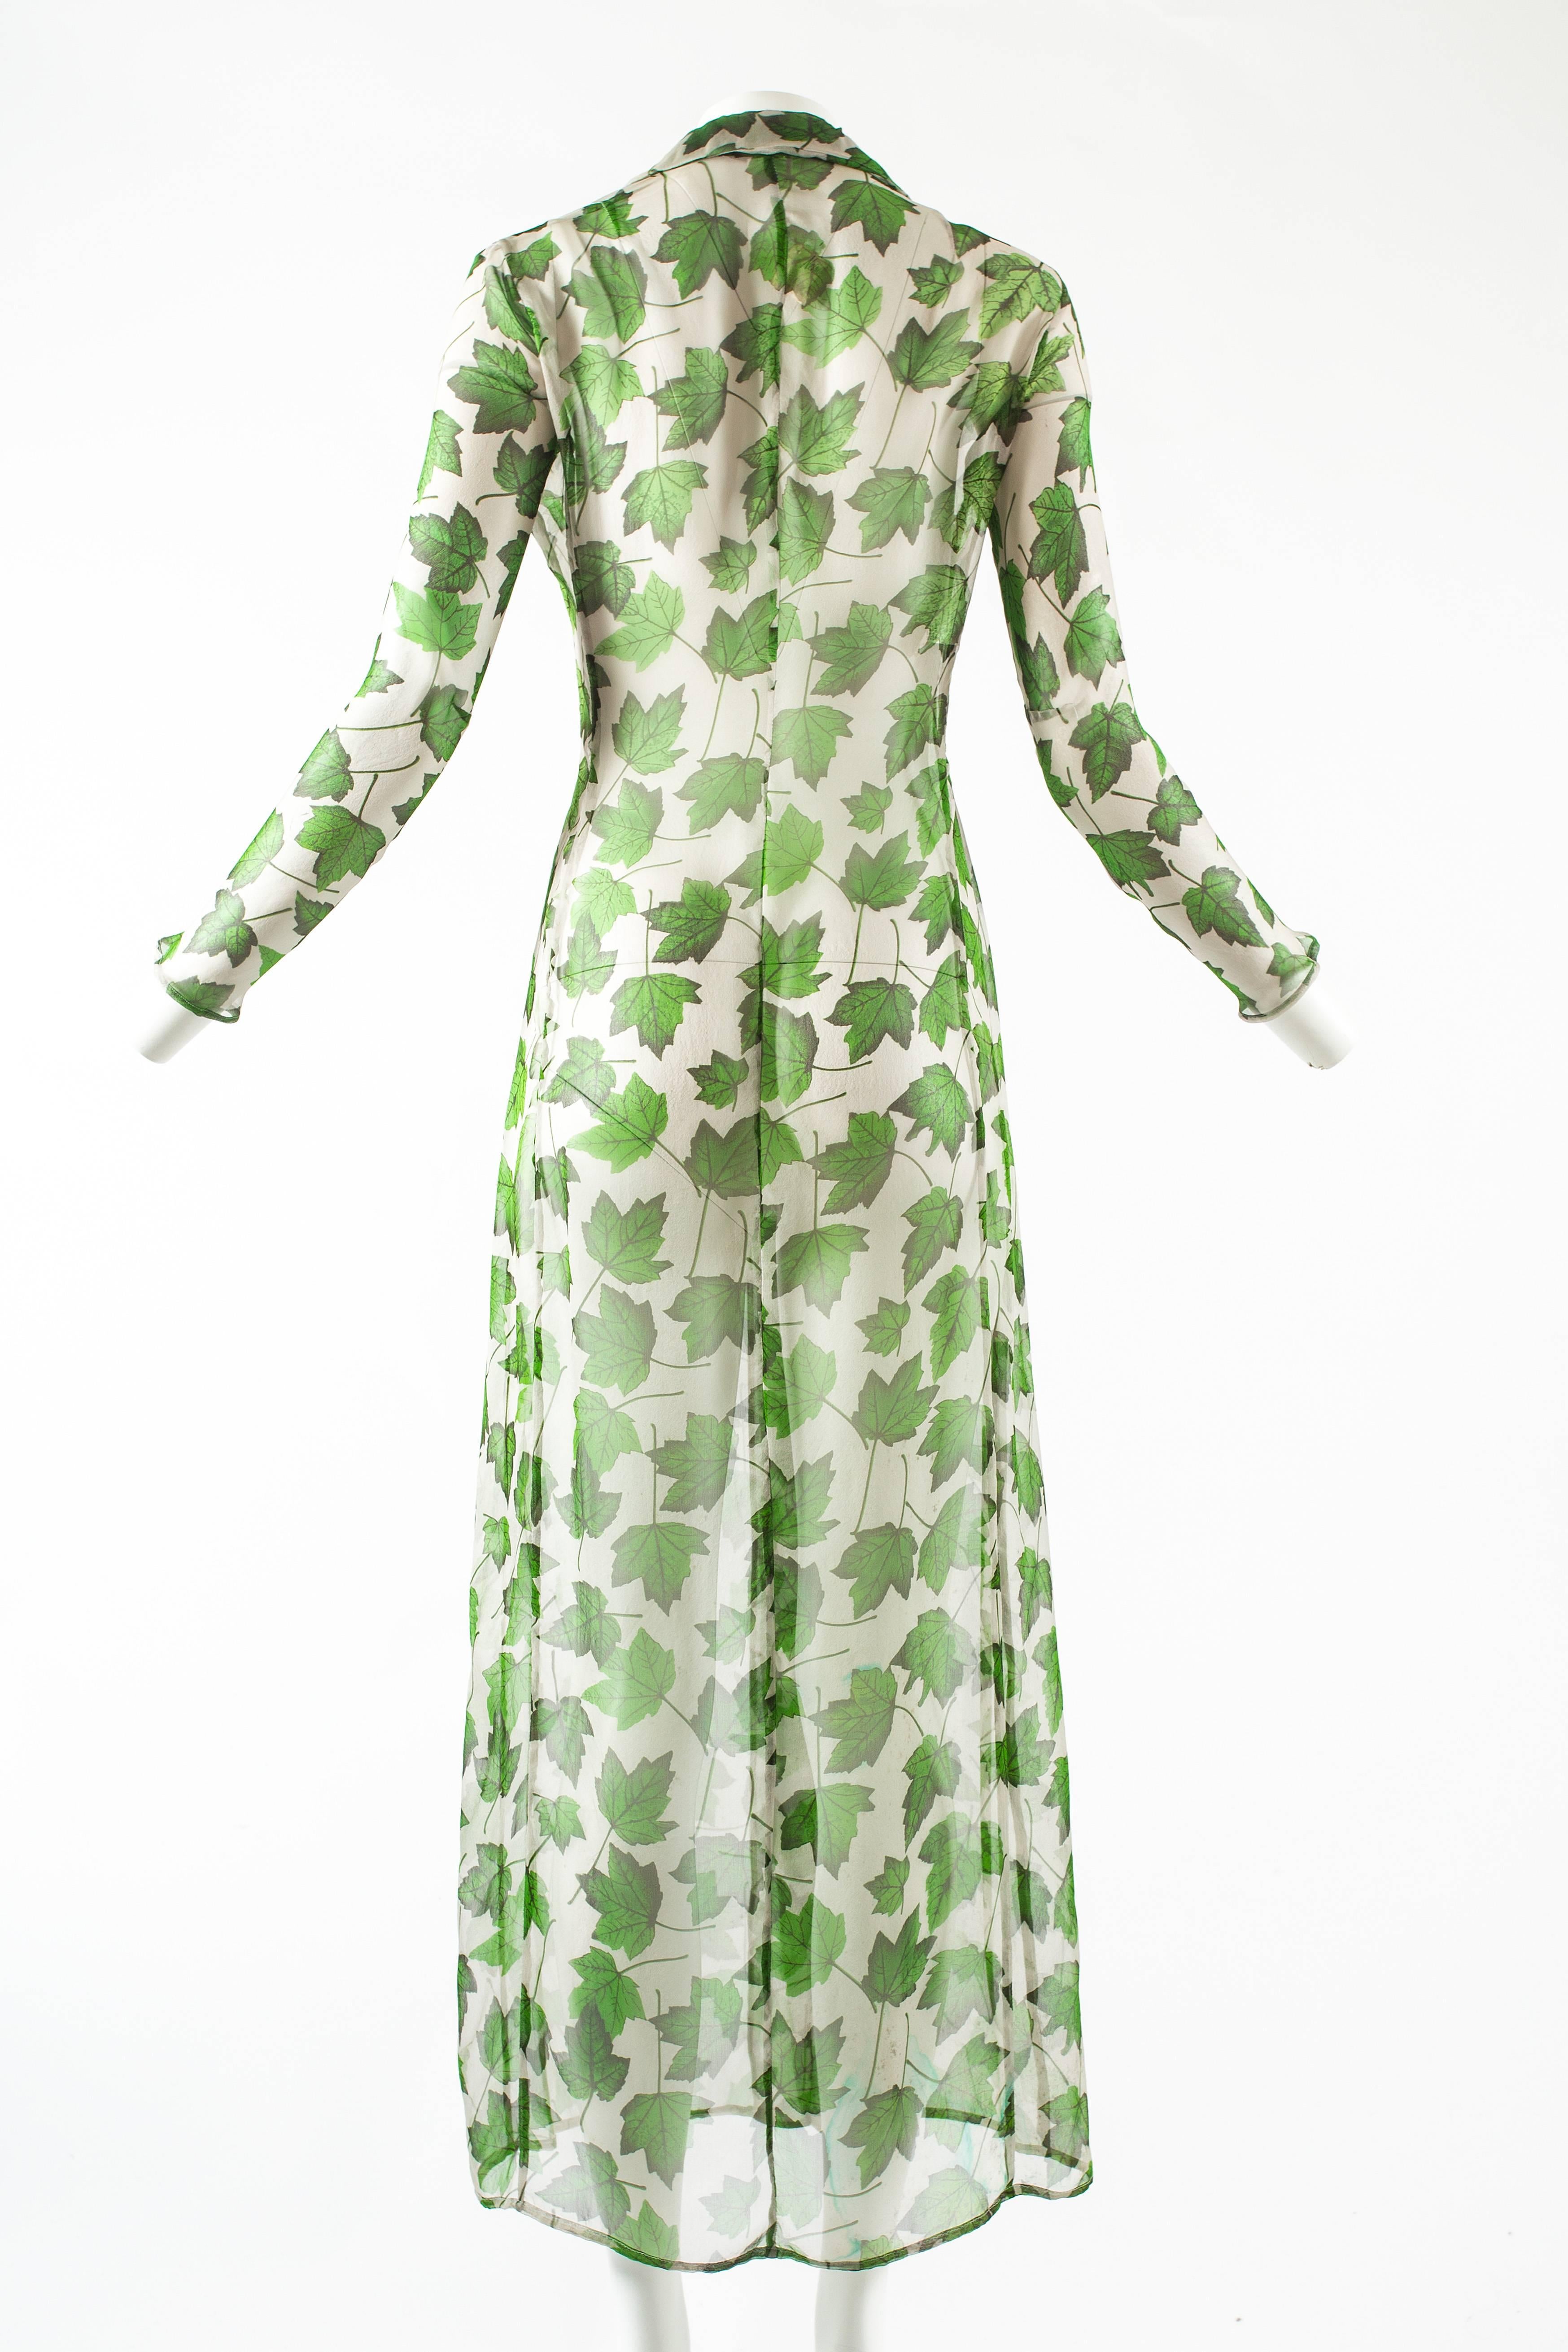 Beige Dolce & Gabbana Spring-Summer 1997 chiffon dress with foliage print